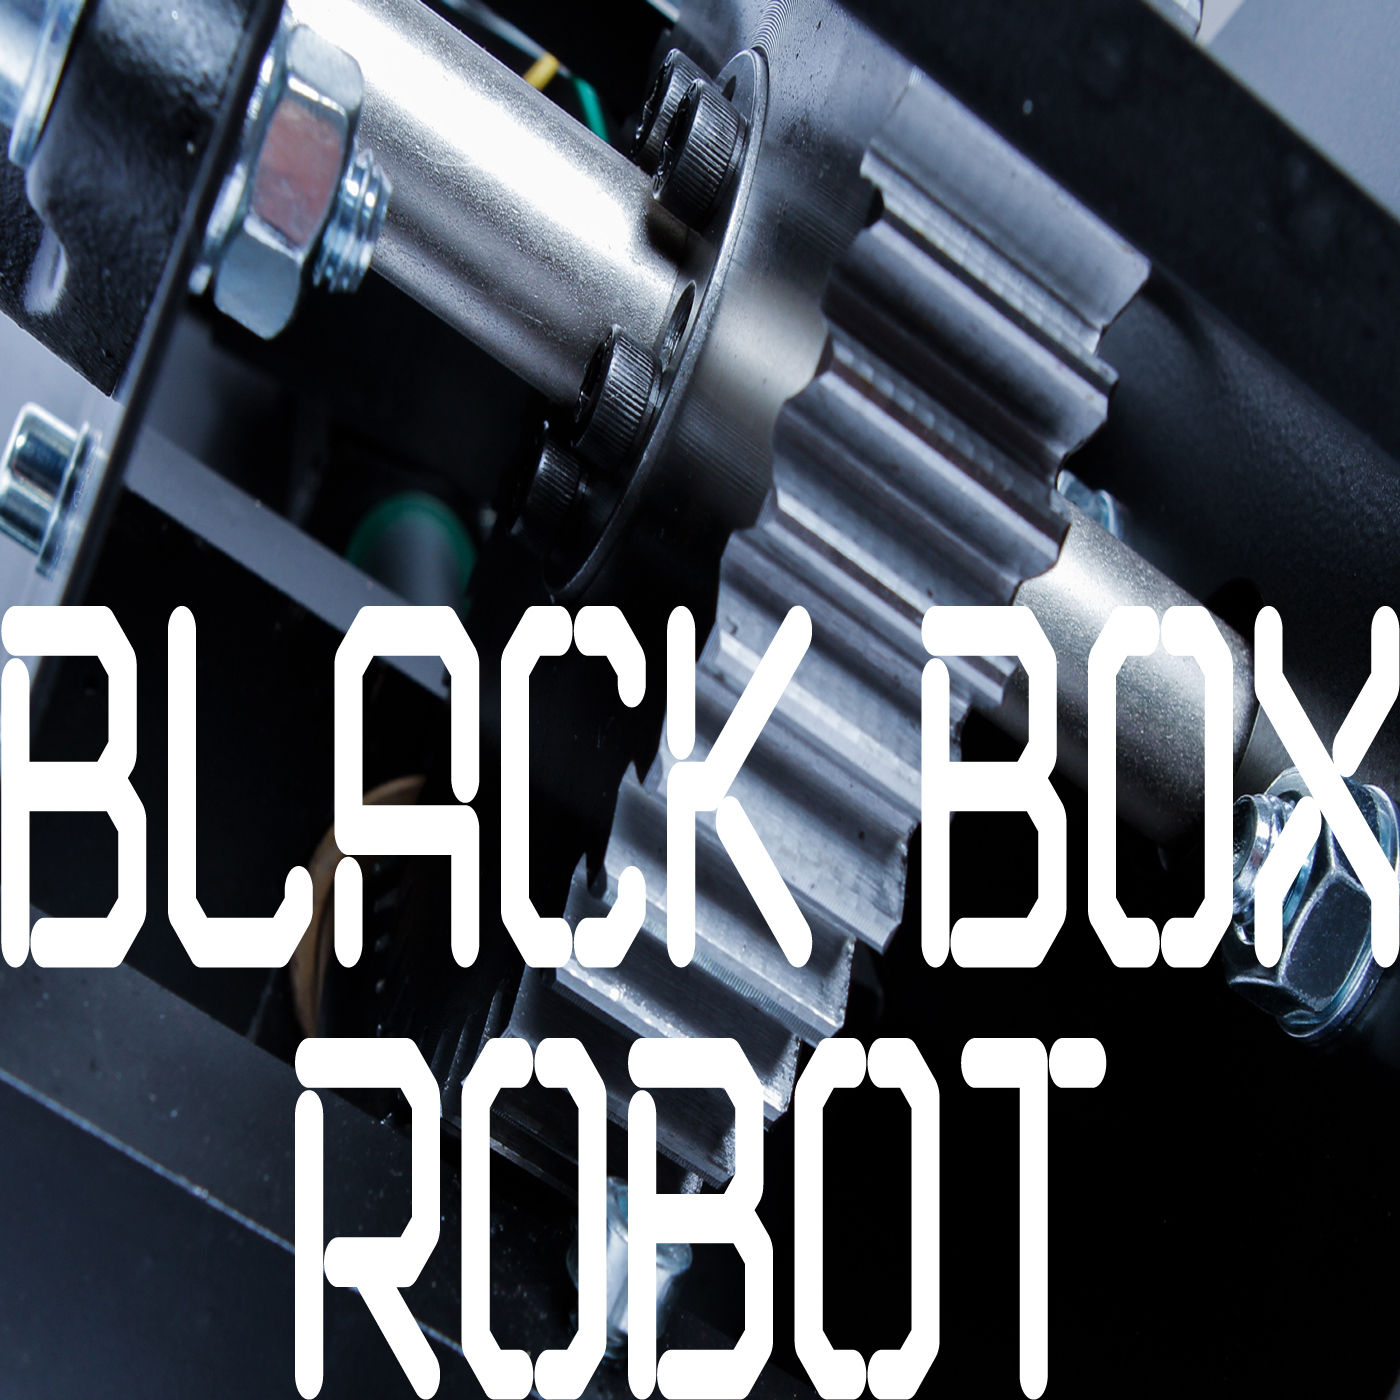 BLACK BOX - Robot(신남, 신비, 잔잔, 격렬, 비트, 즐거움, 흥겨움, 클럽, 긴장, 비장, 흥함, 일렉)